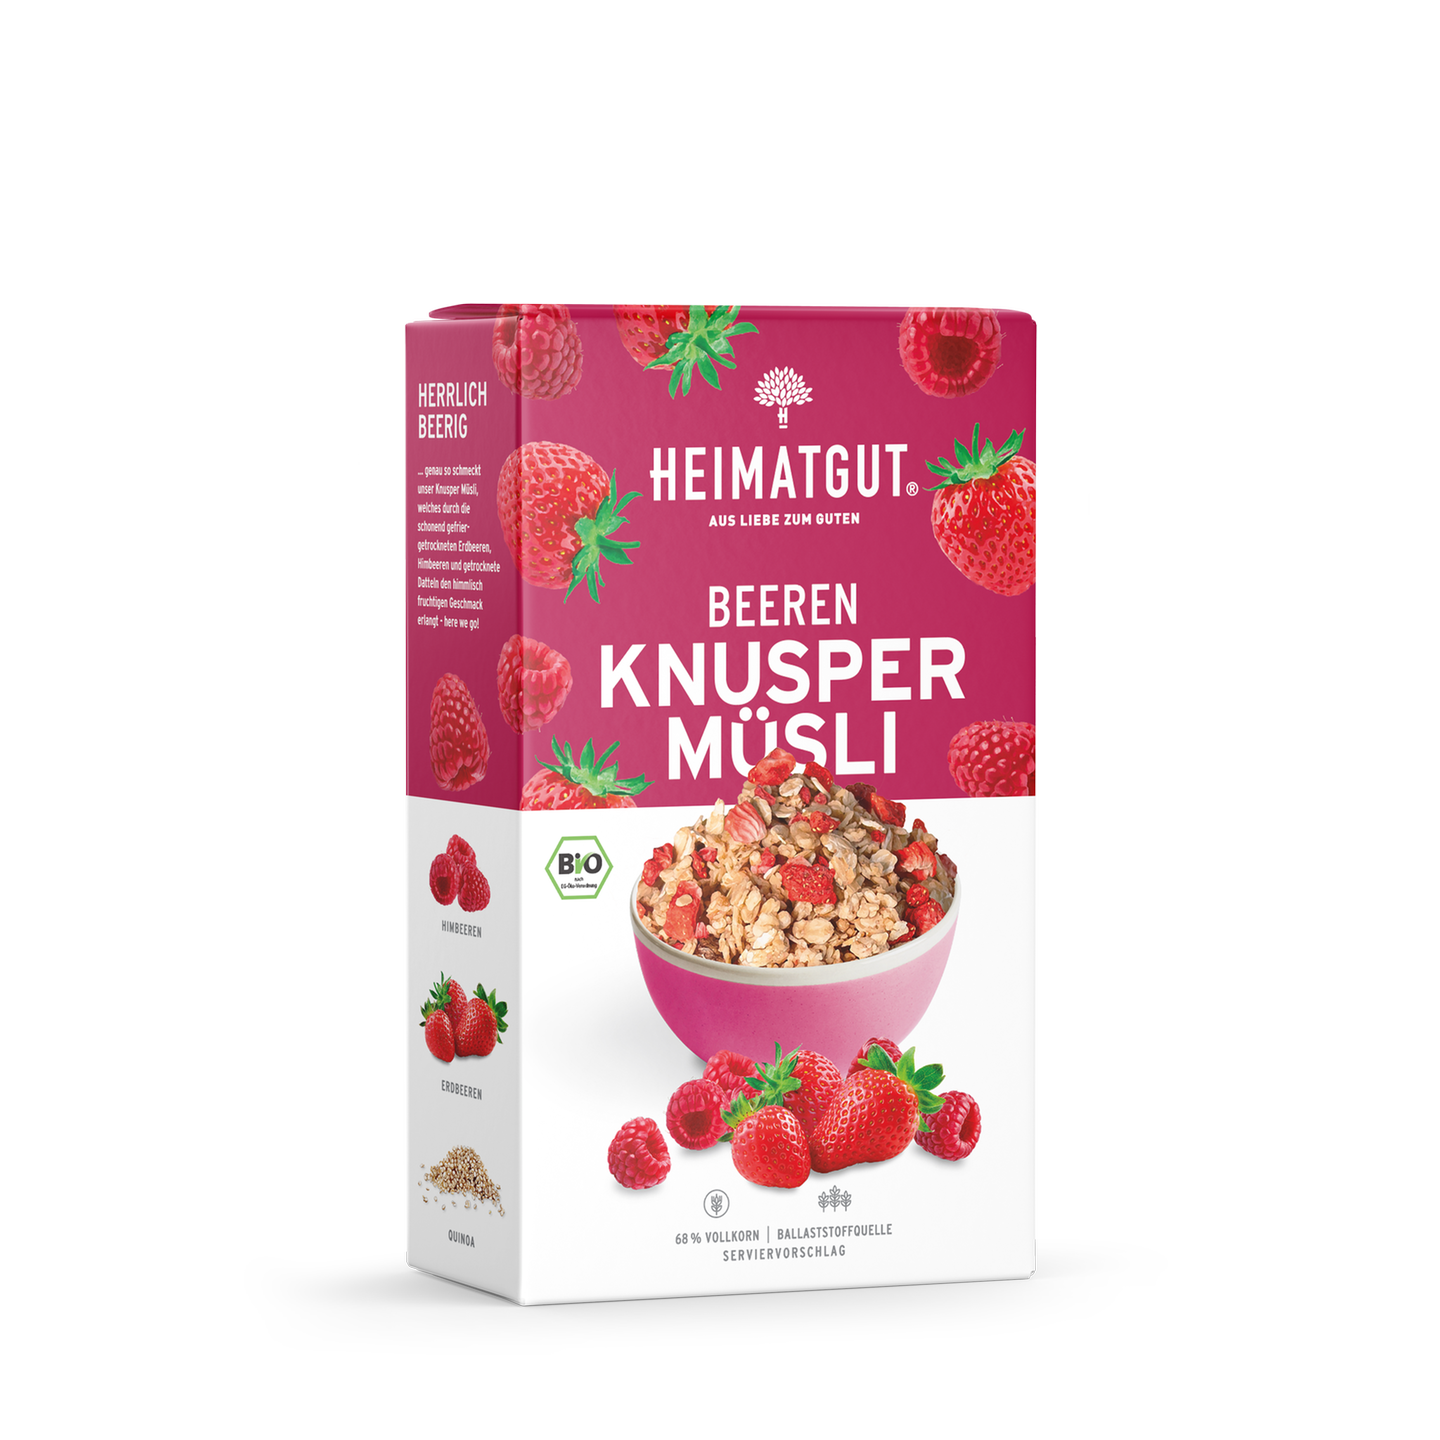 Food News: Knuspermüsli "Beeren" von Heimatgut